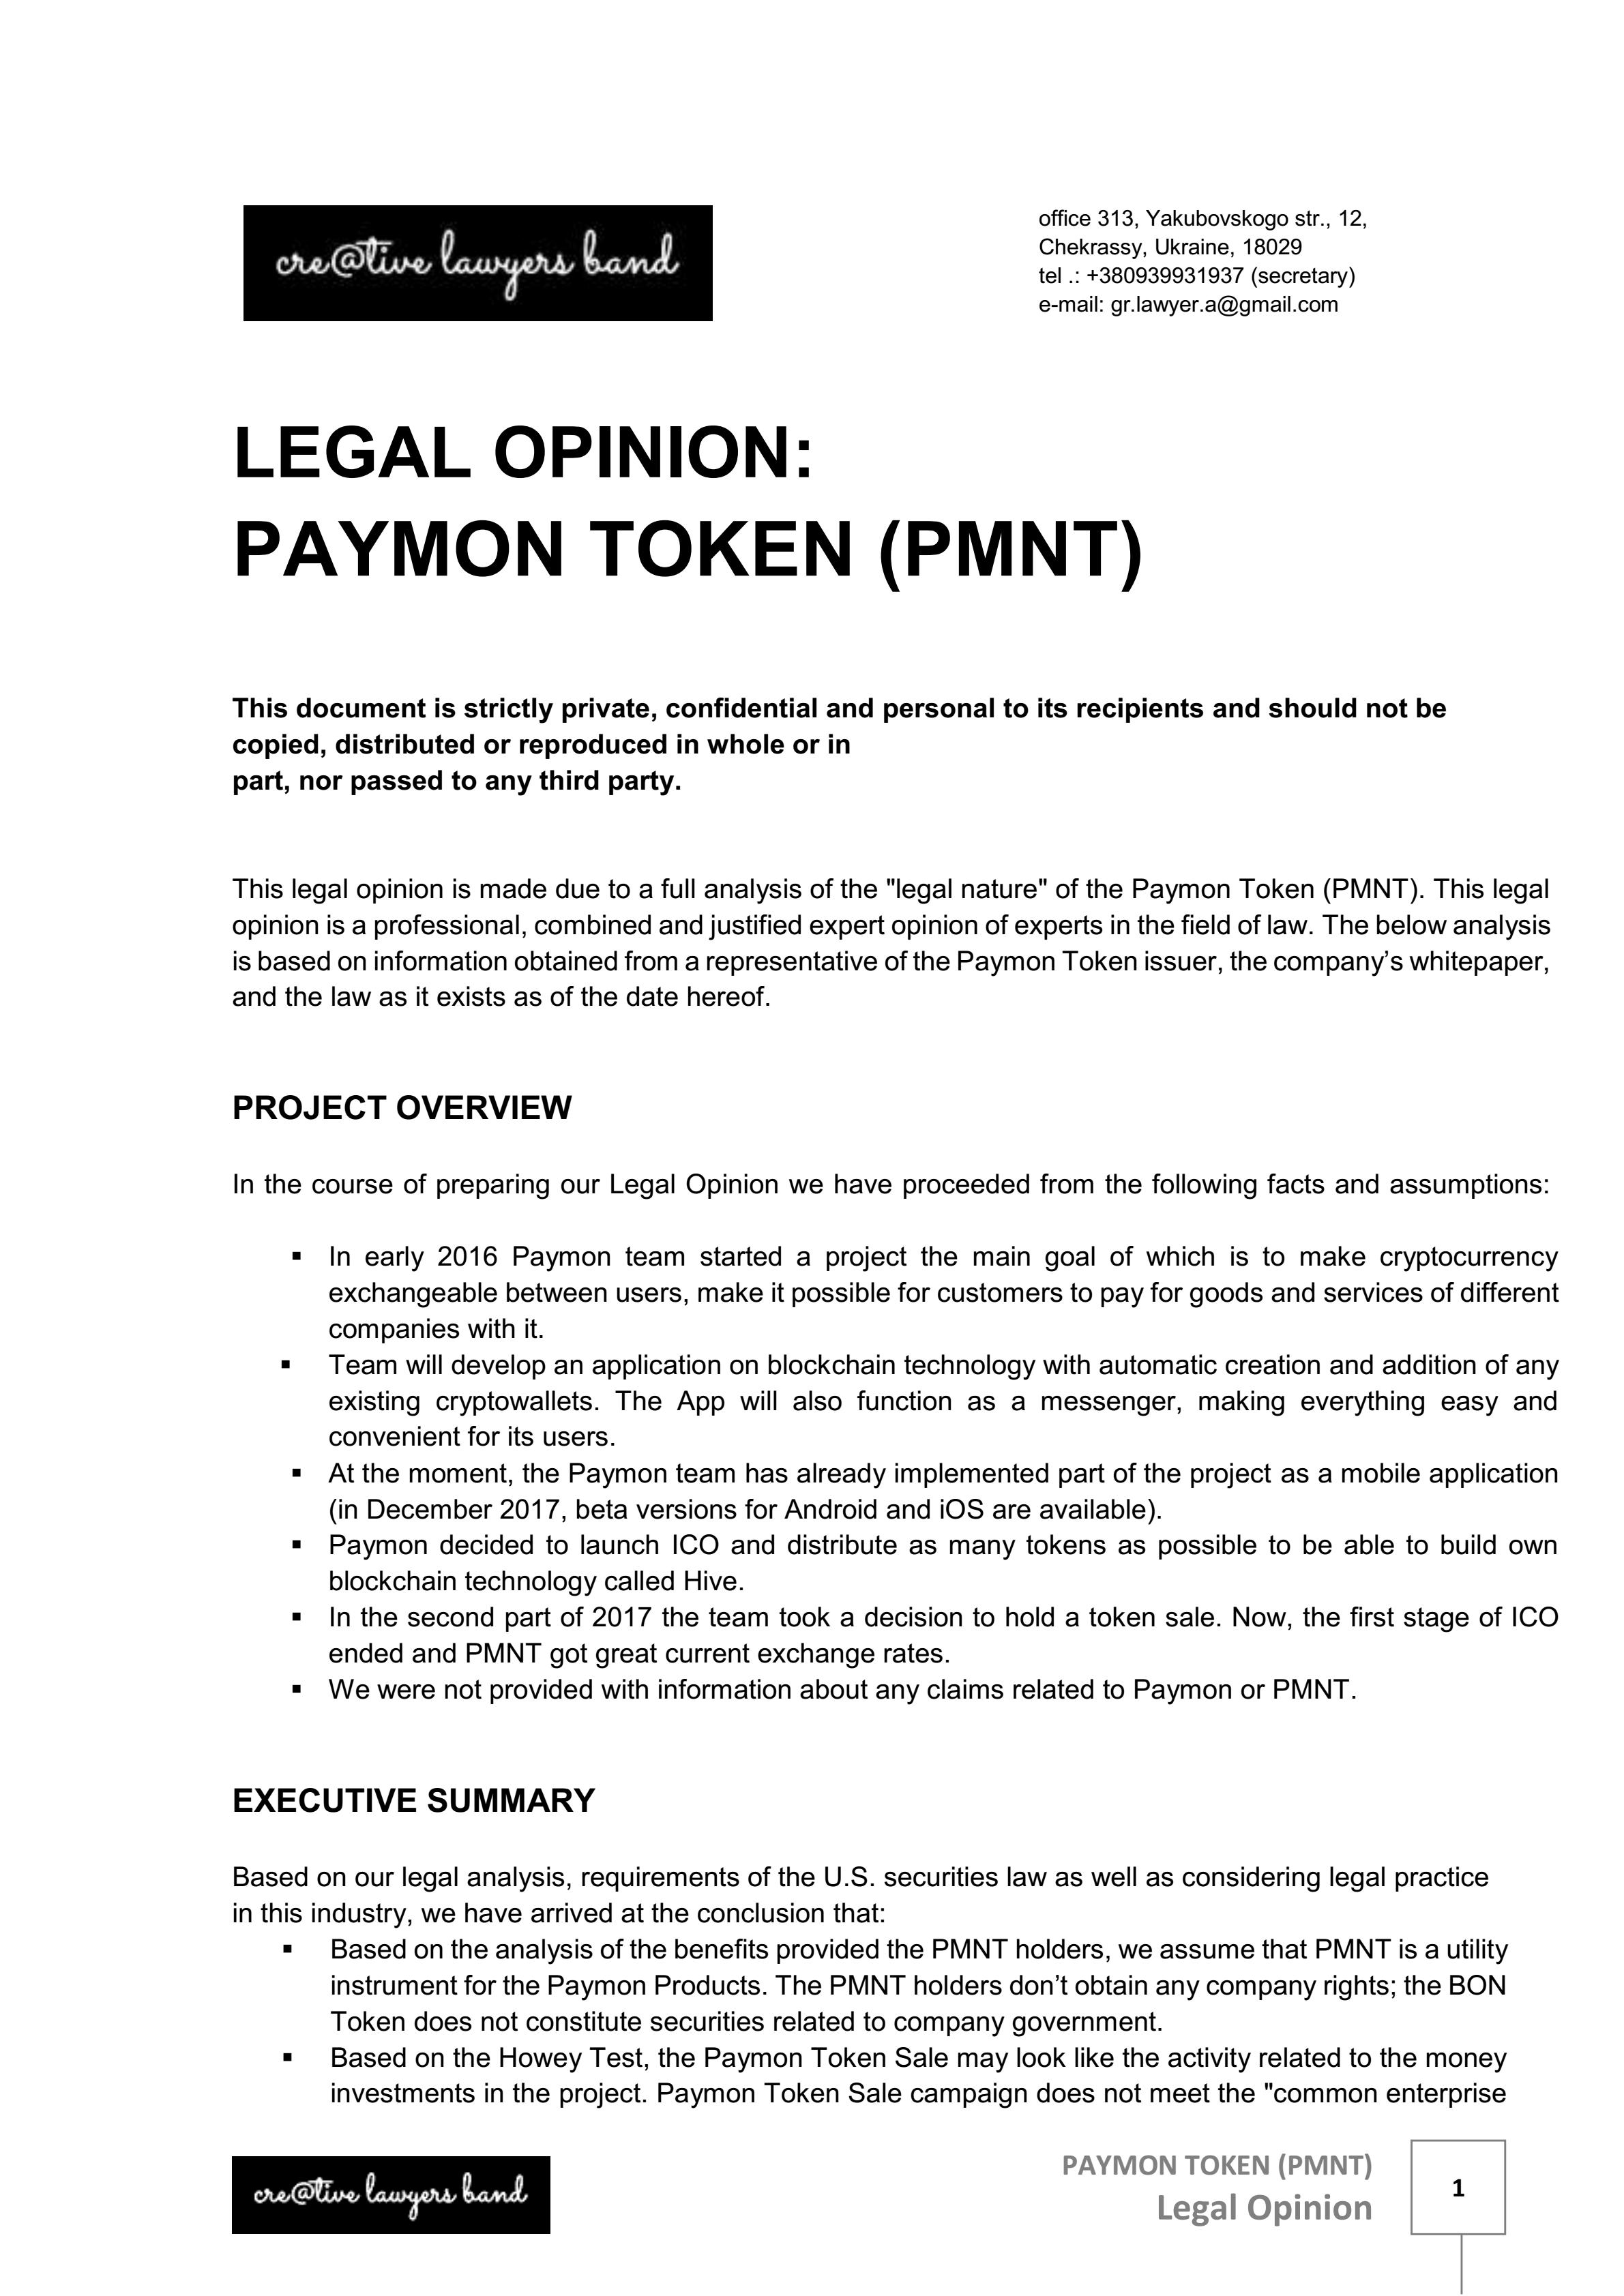 PMNT_Legal_Opinion_Paymon_Token_1_00.jpg